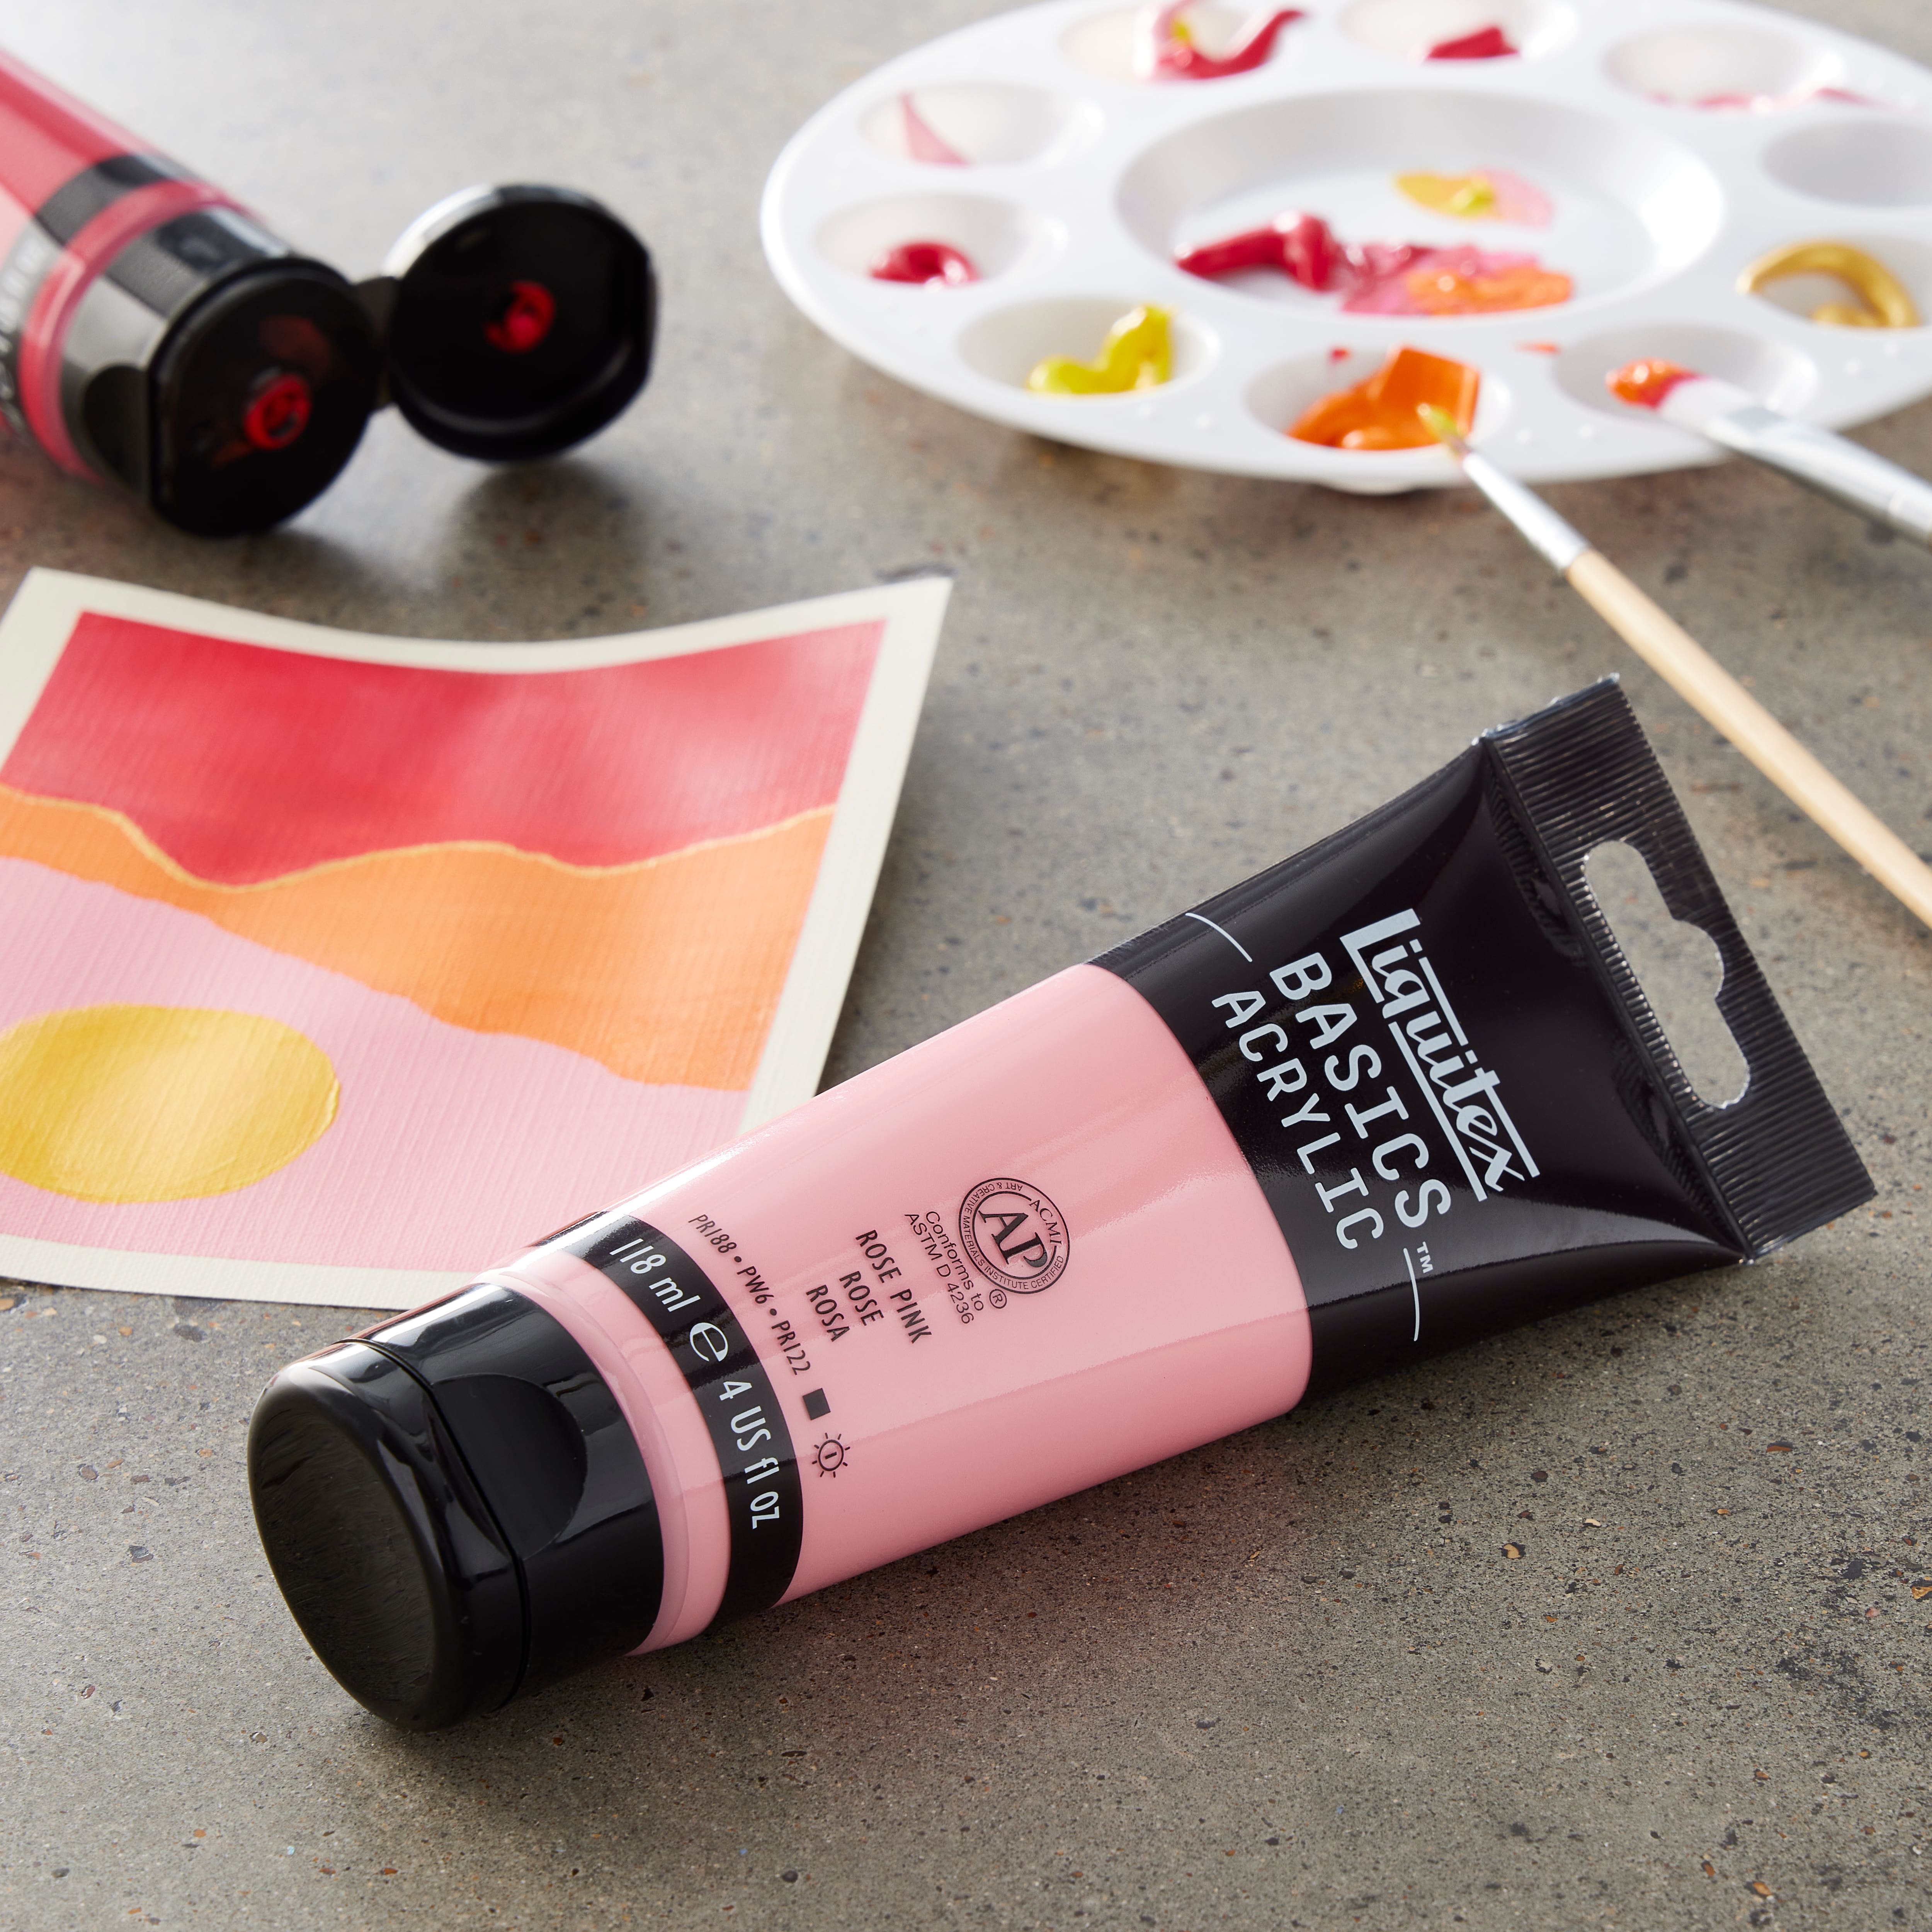 Liquitex Basics Acrylic Paint Rose Pink 4 oz